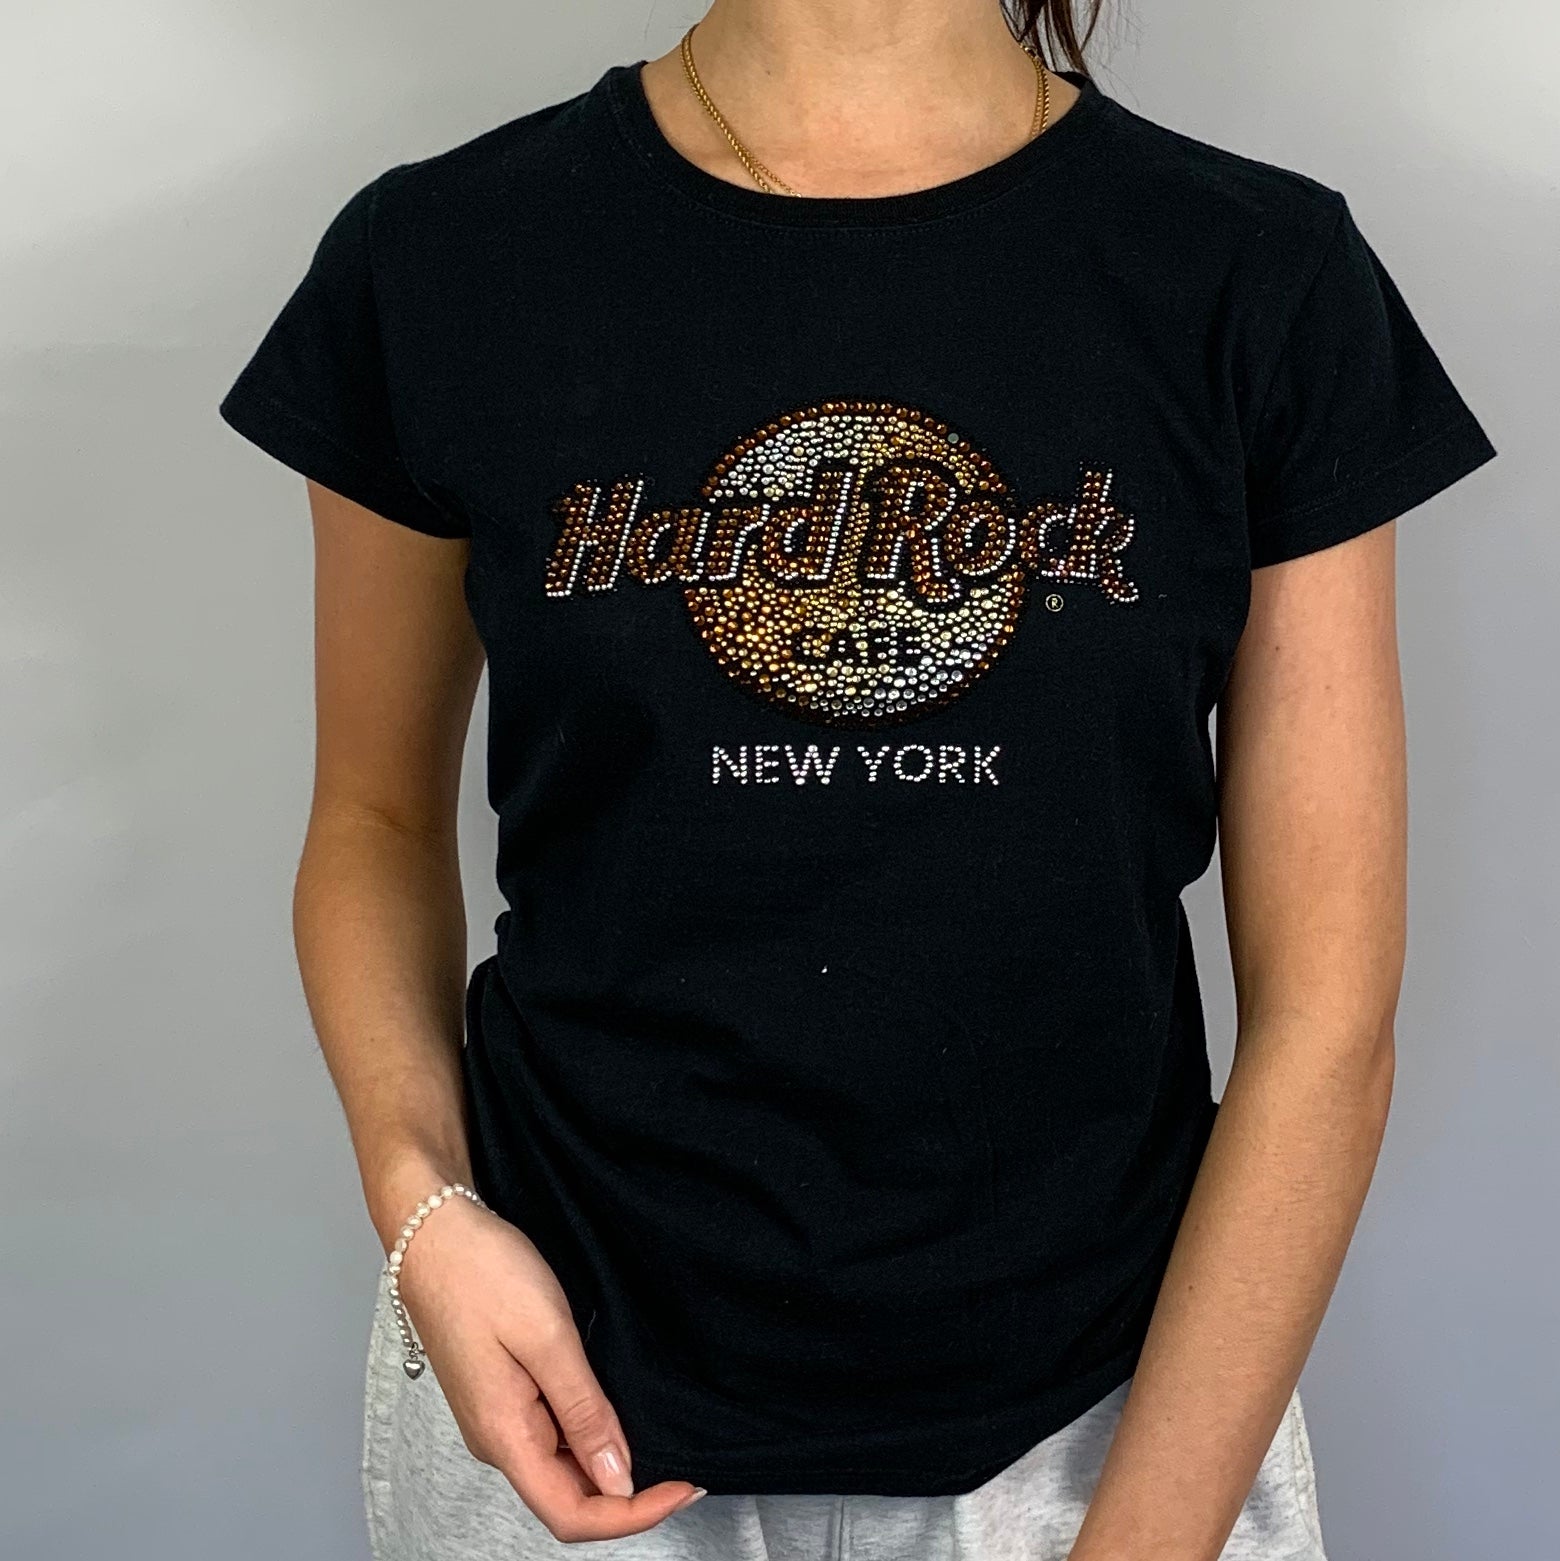 VINTAGE HARD ROCK CAFE New York T-SHIRT - WOMEN'S SMALL